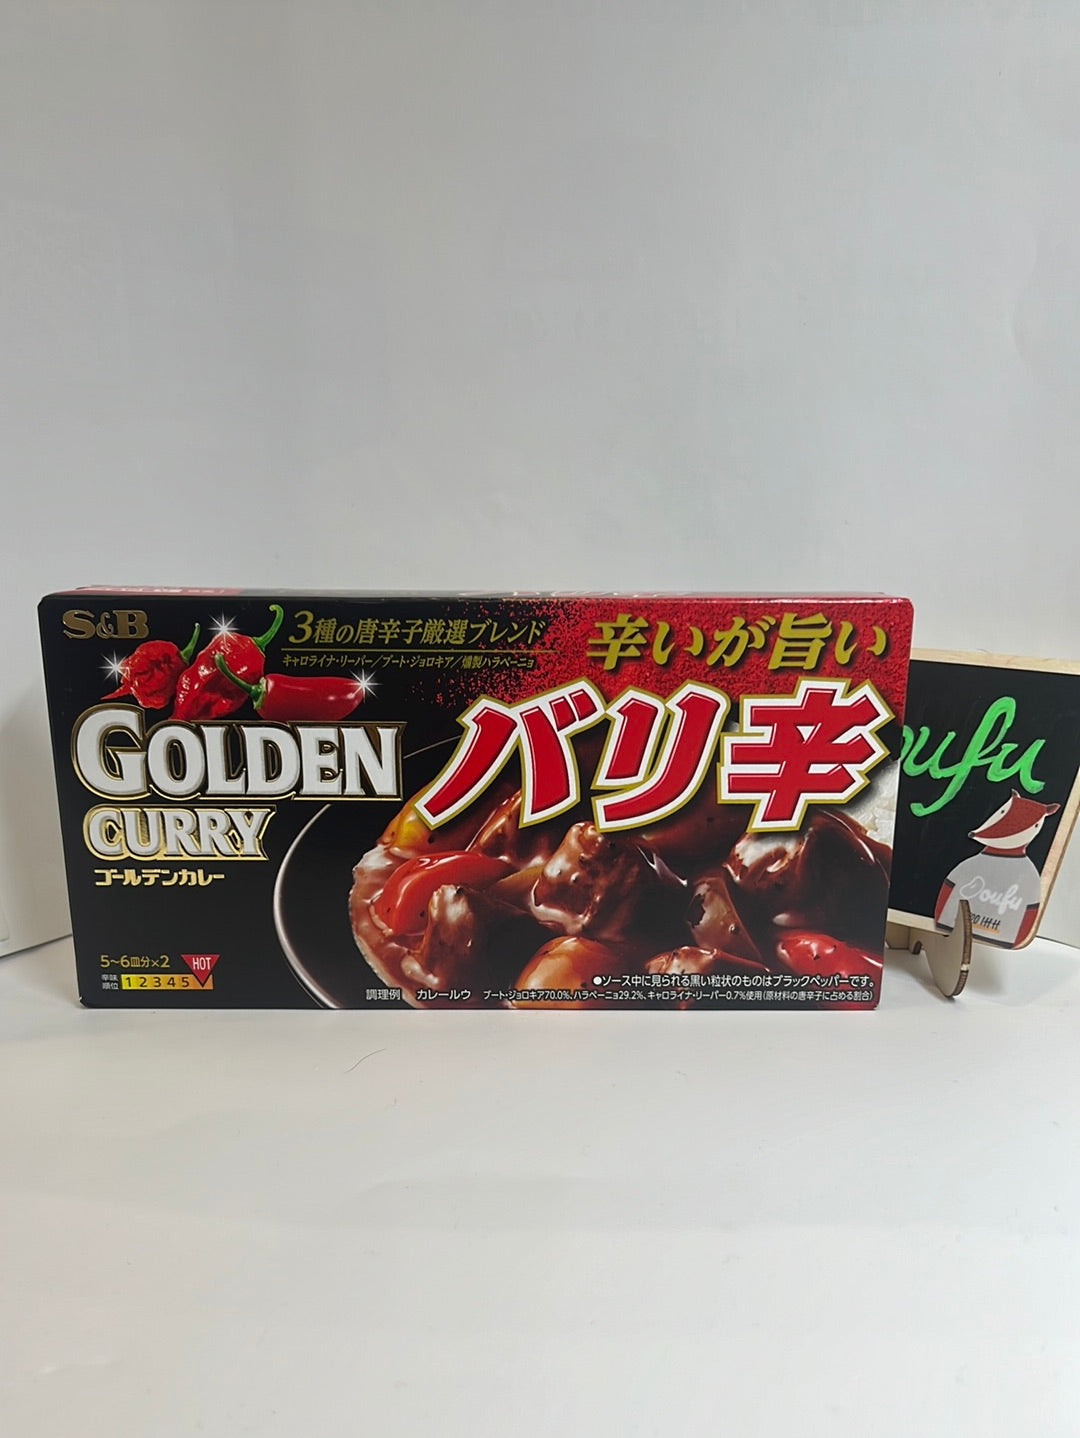 S&B Golden Curry Bali Spicy 金牌咖喱辣味